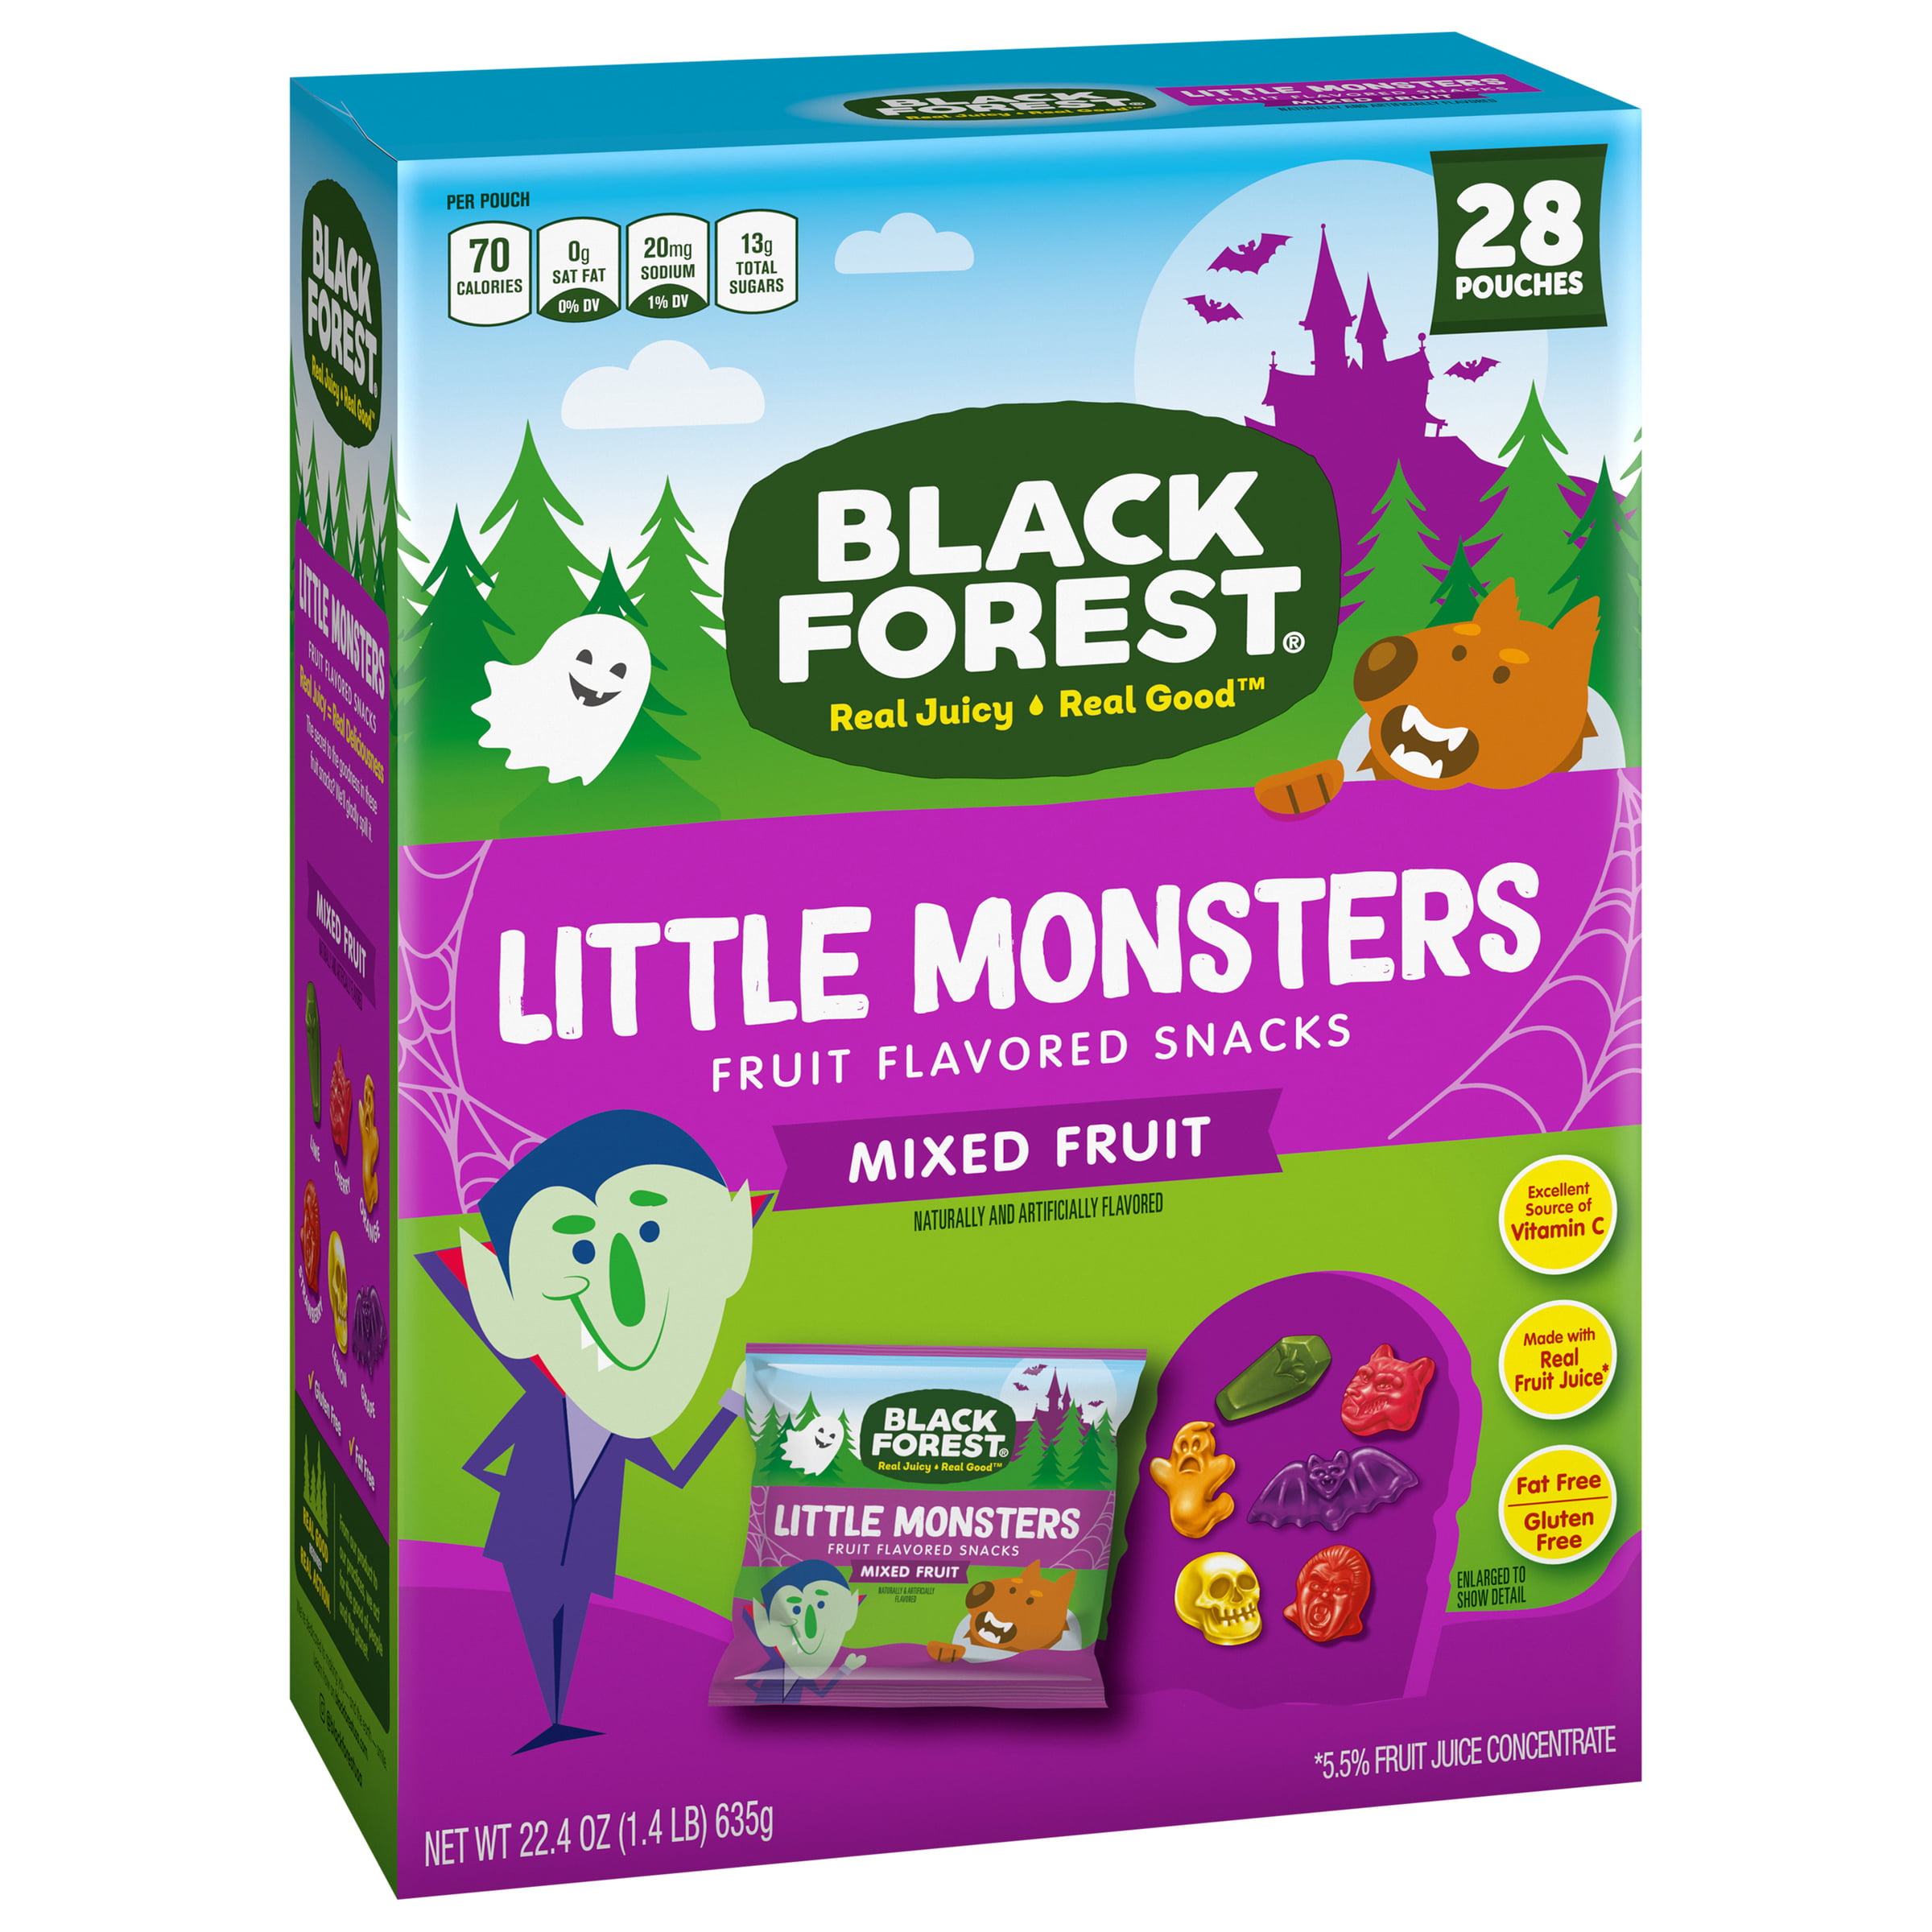 Black Forest Little Monsters Halloween Fruit Snacks, Assorted Fruit Flavors  22.4 Oz, 28 Count - Walmart.com